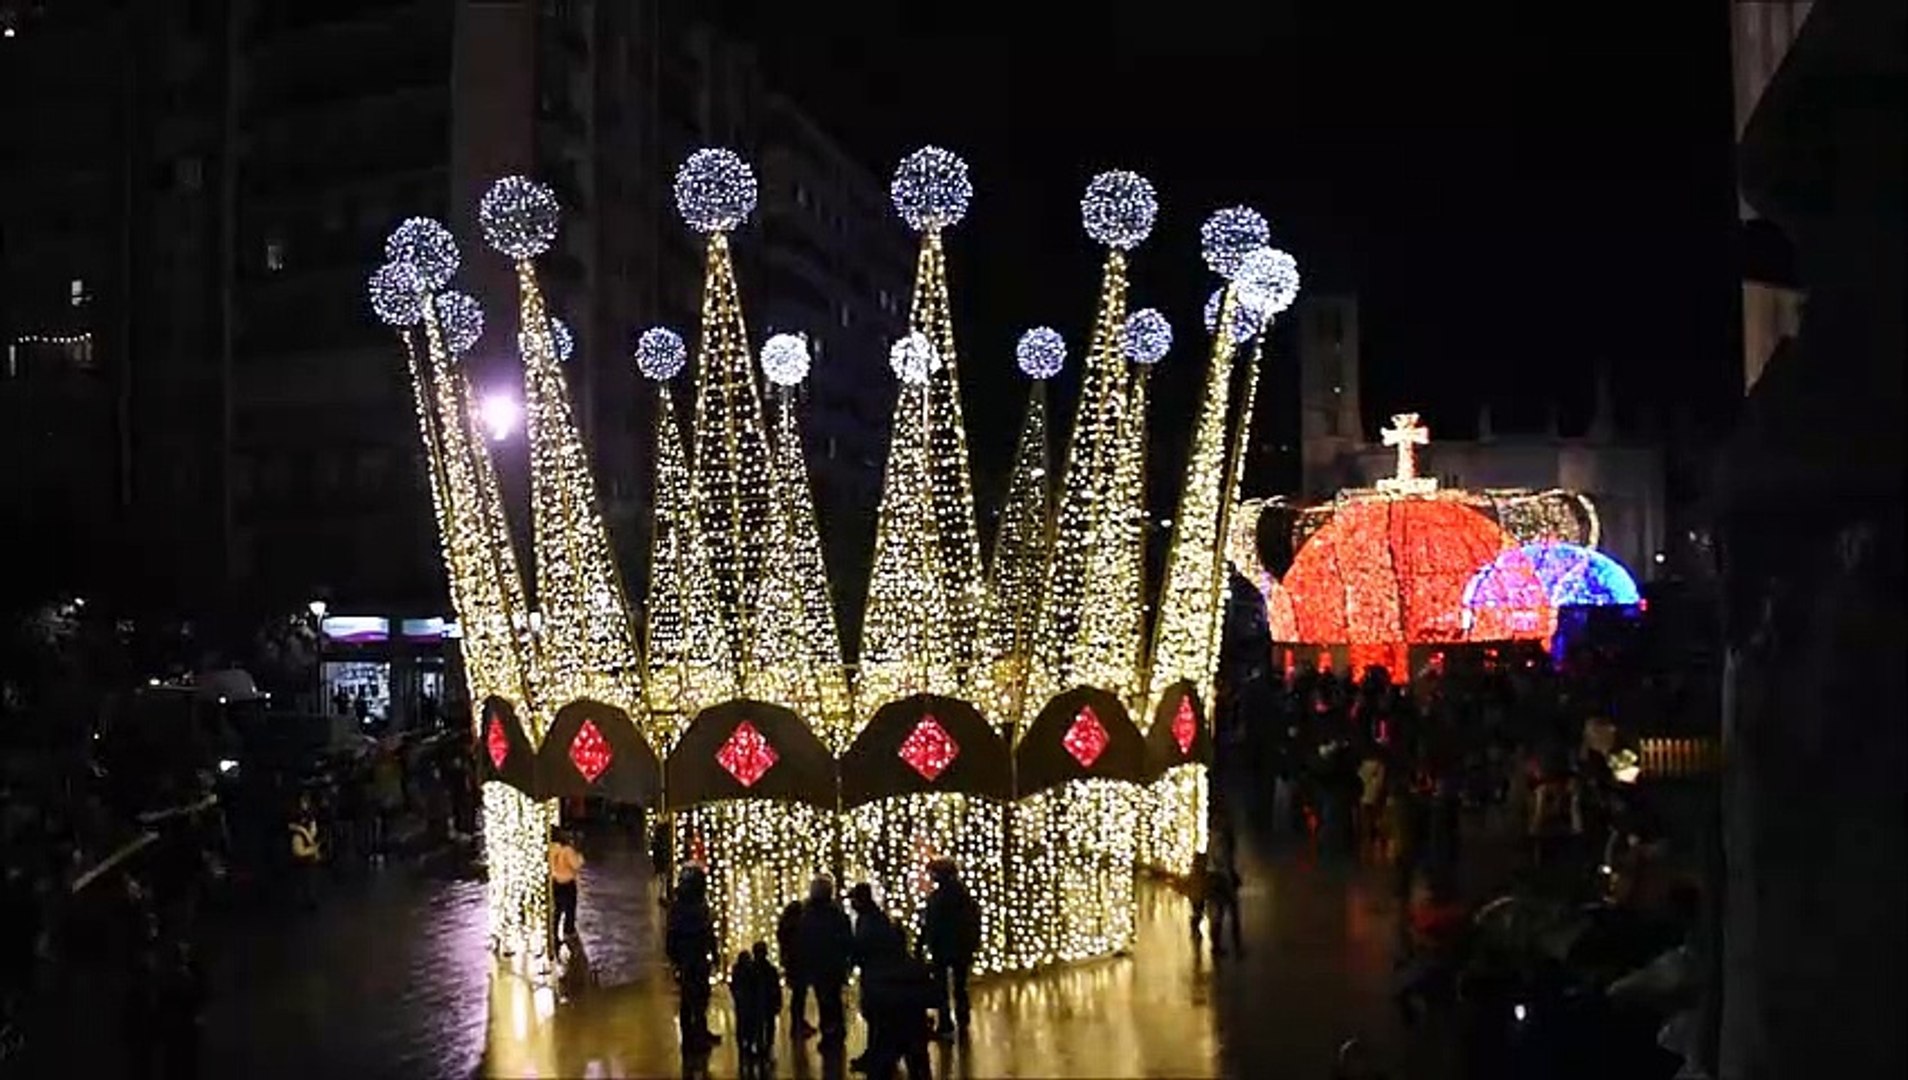 Espectáculo de luces navideñas en Plaza Portugalete - Vídeo Dailymotion